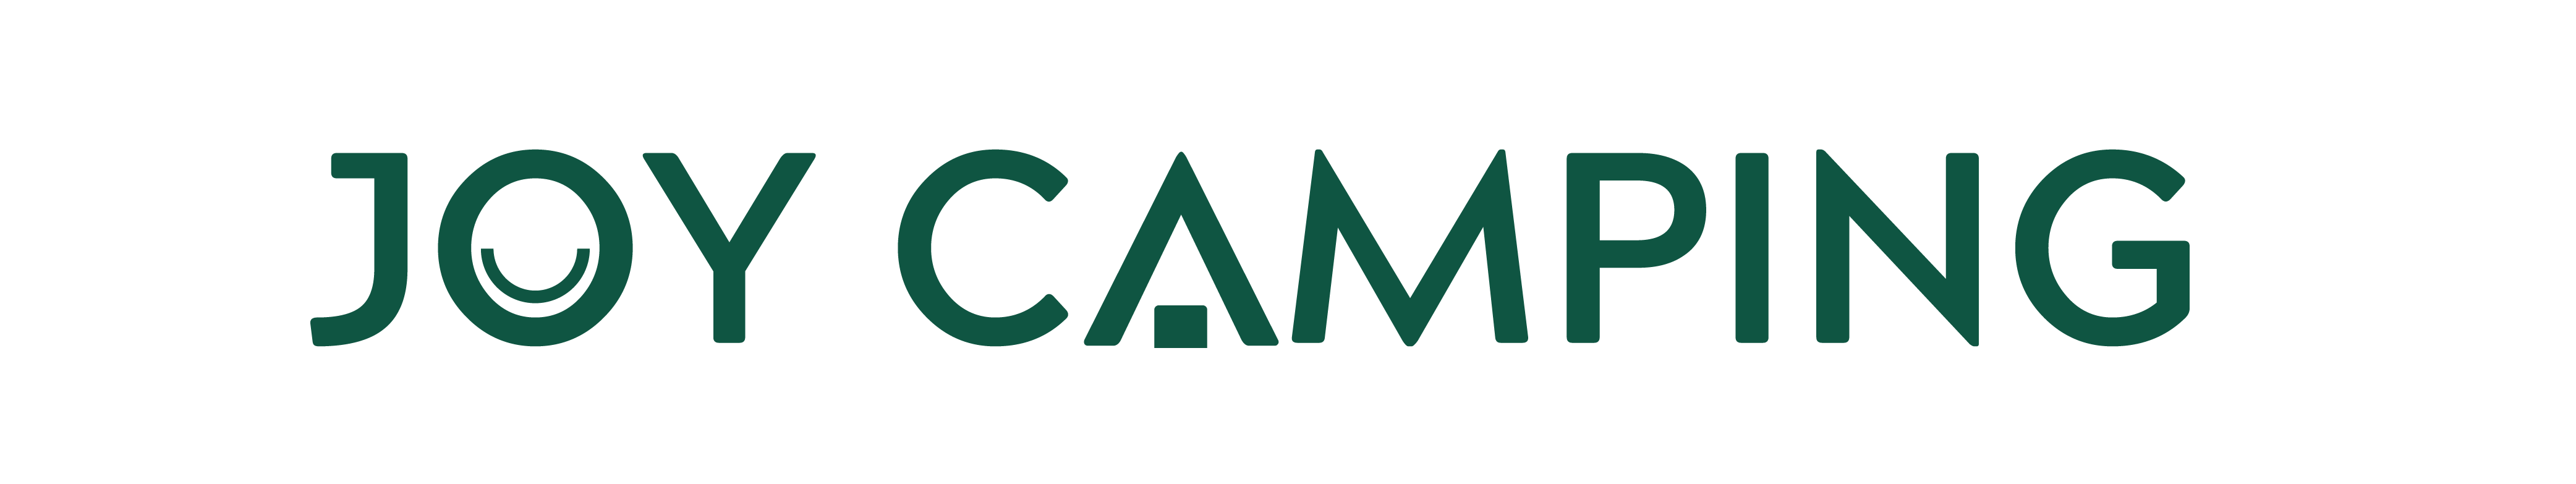 Logo Text - Joy Camping